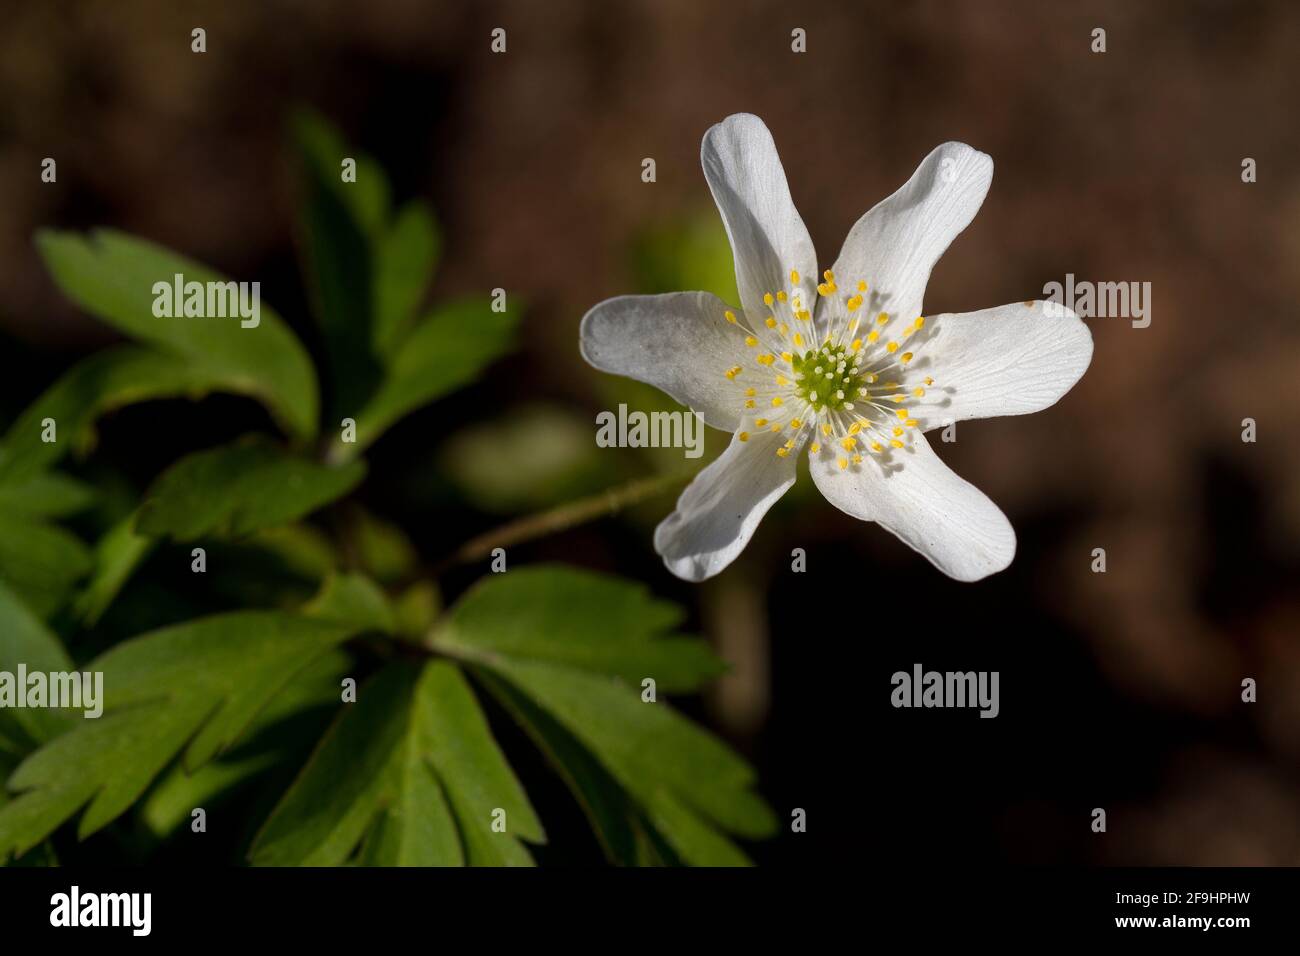 Beautiful white flower of Wood anemone reaching for sunlight Stock Photo